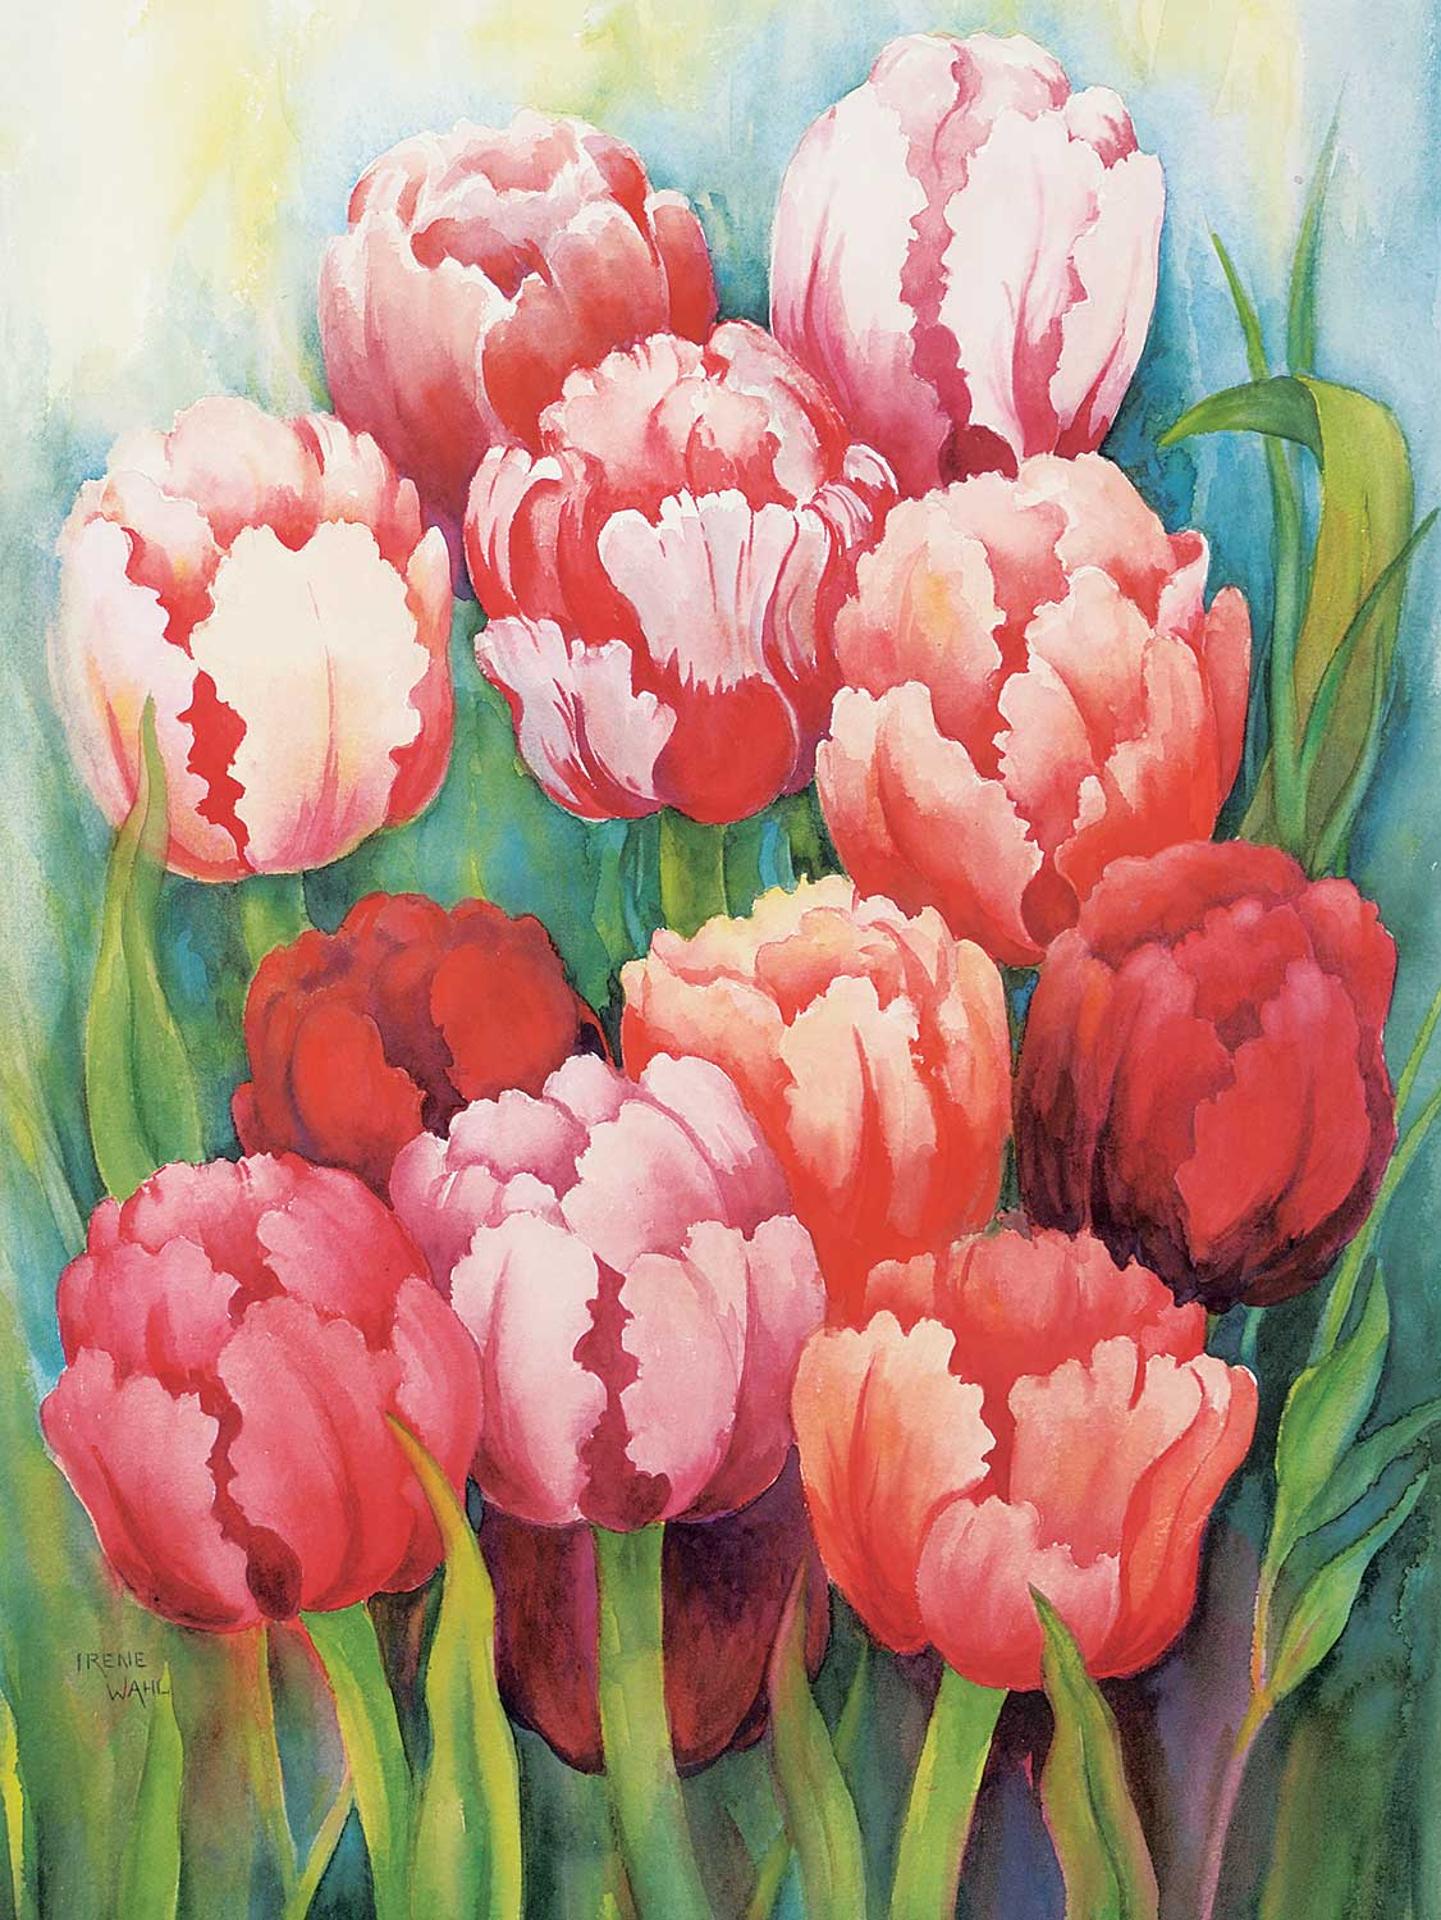 Irene Wahl (1927-2022) - Untitled - Tulips